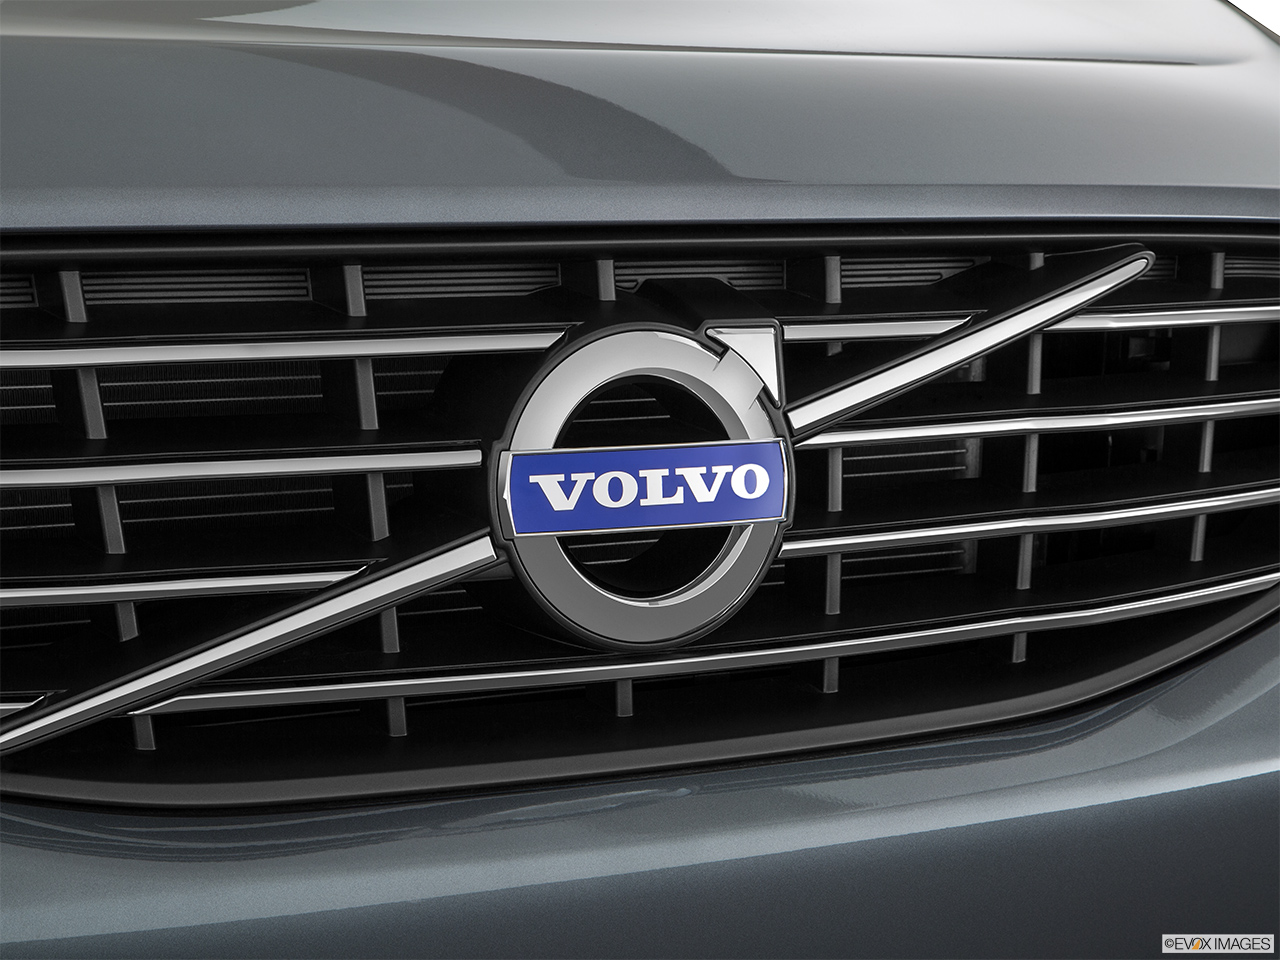 2017 Volvo XC60 T5 Inscription Rear manufacture badge/emblem 